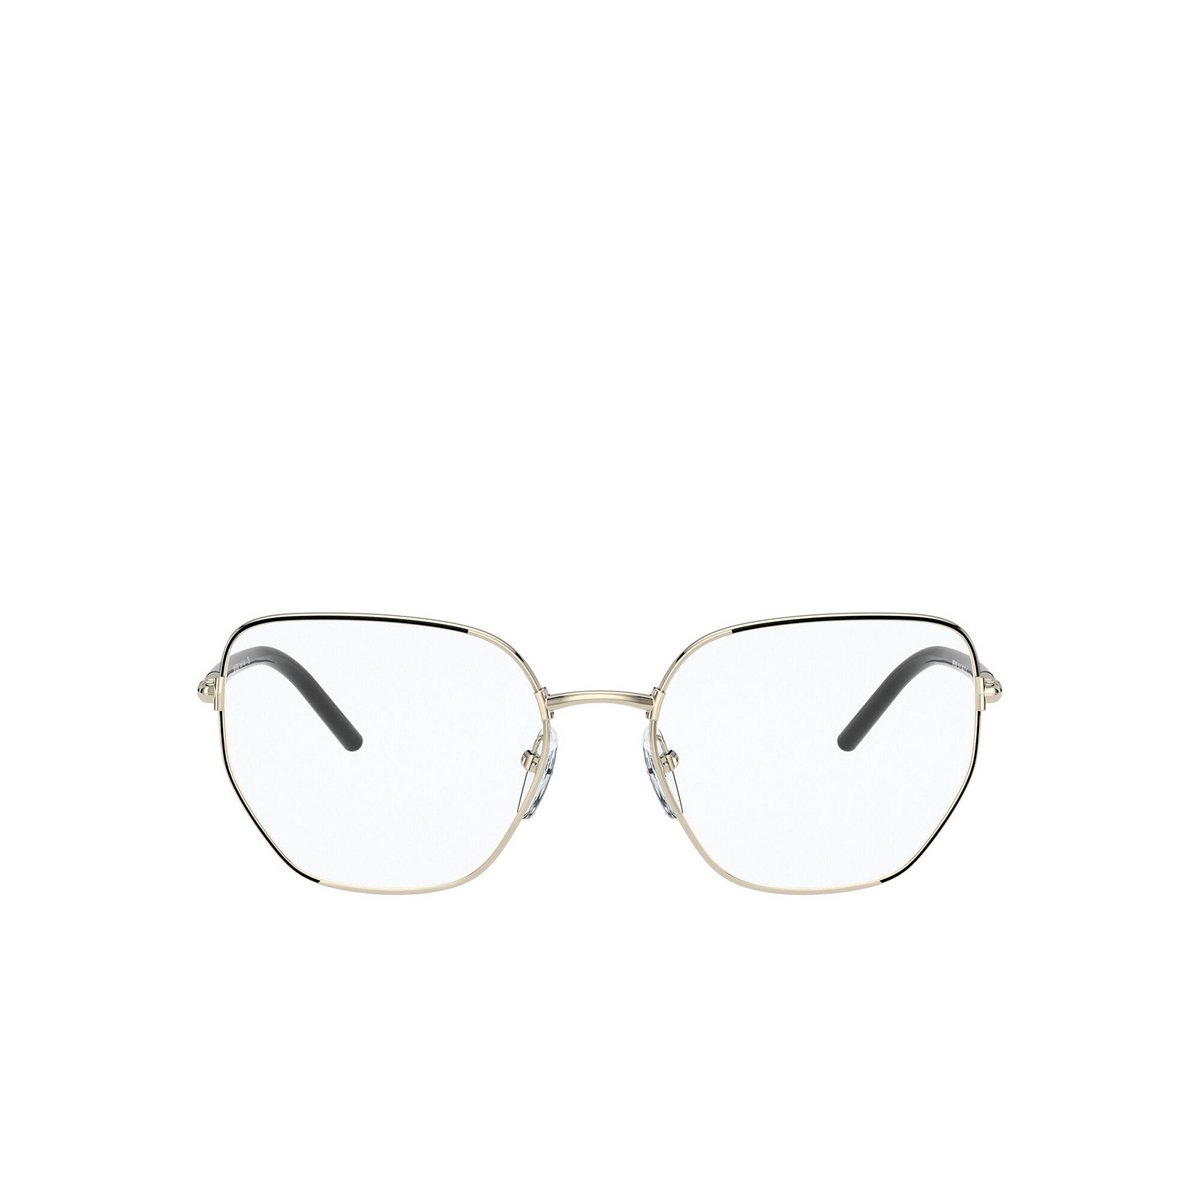 Prada® Irregular Eyeglasses: PR 60WV color Black / Pale Gold AAV1O1 - front view.